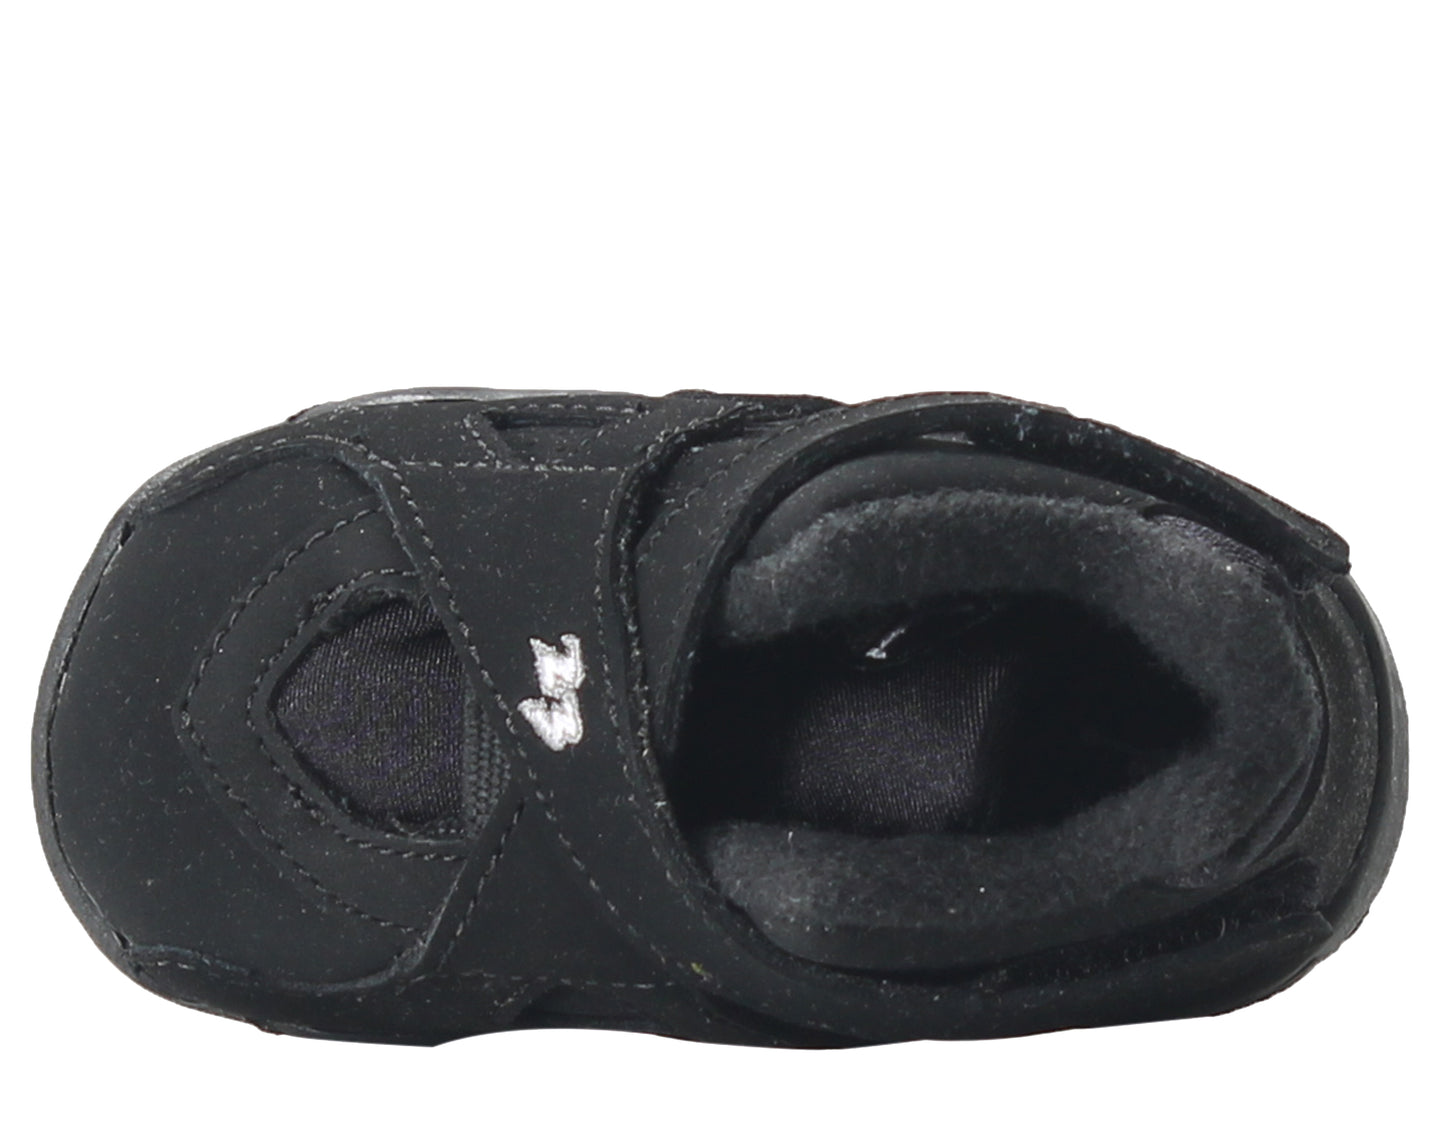 Nike Air Jordan 8 Retro BT (TD) Chrome Toddler Boys Basketball Shoes 305360-003